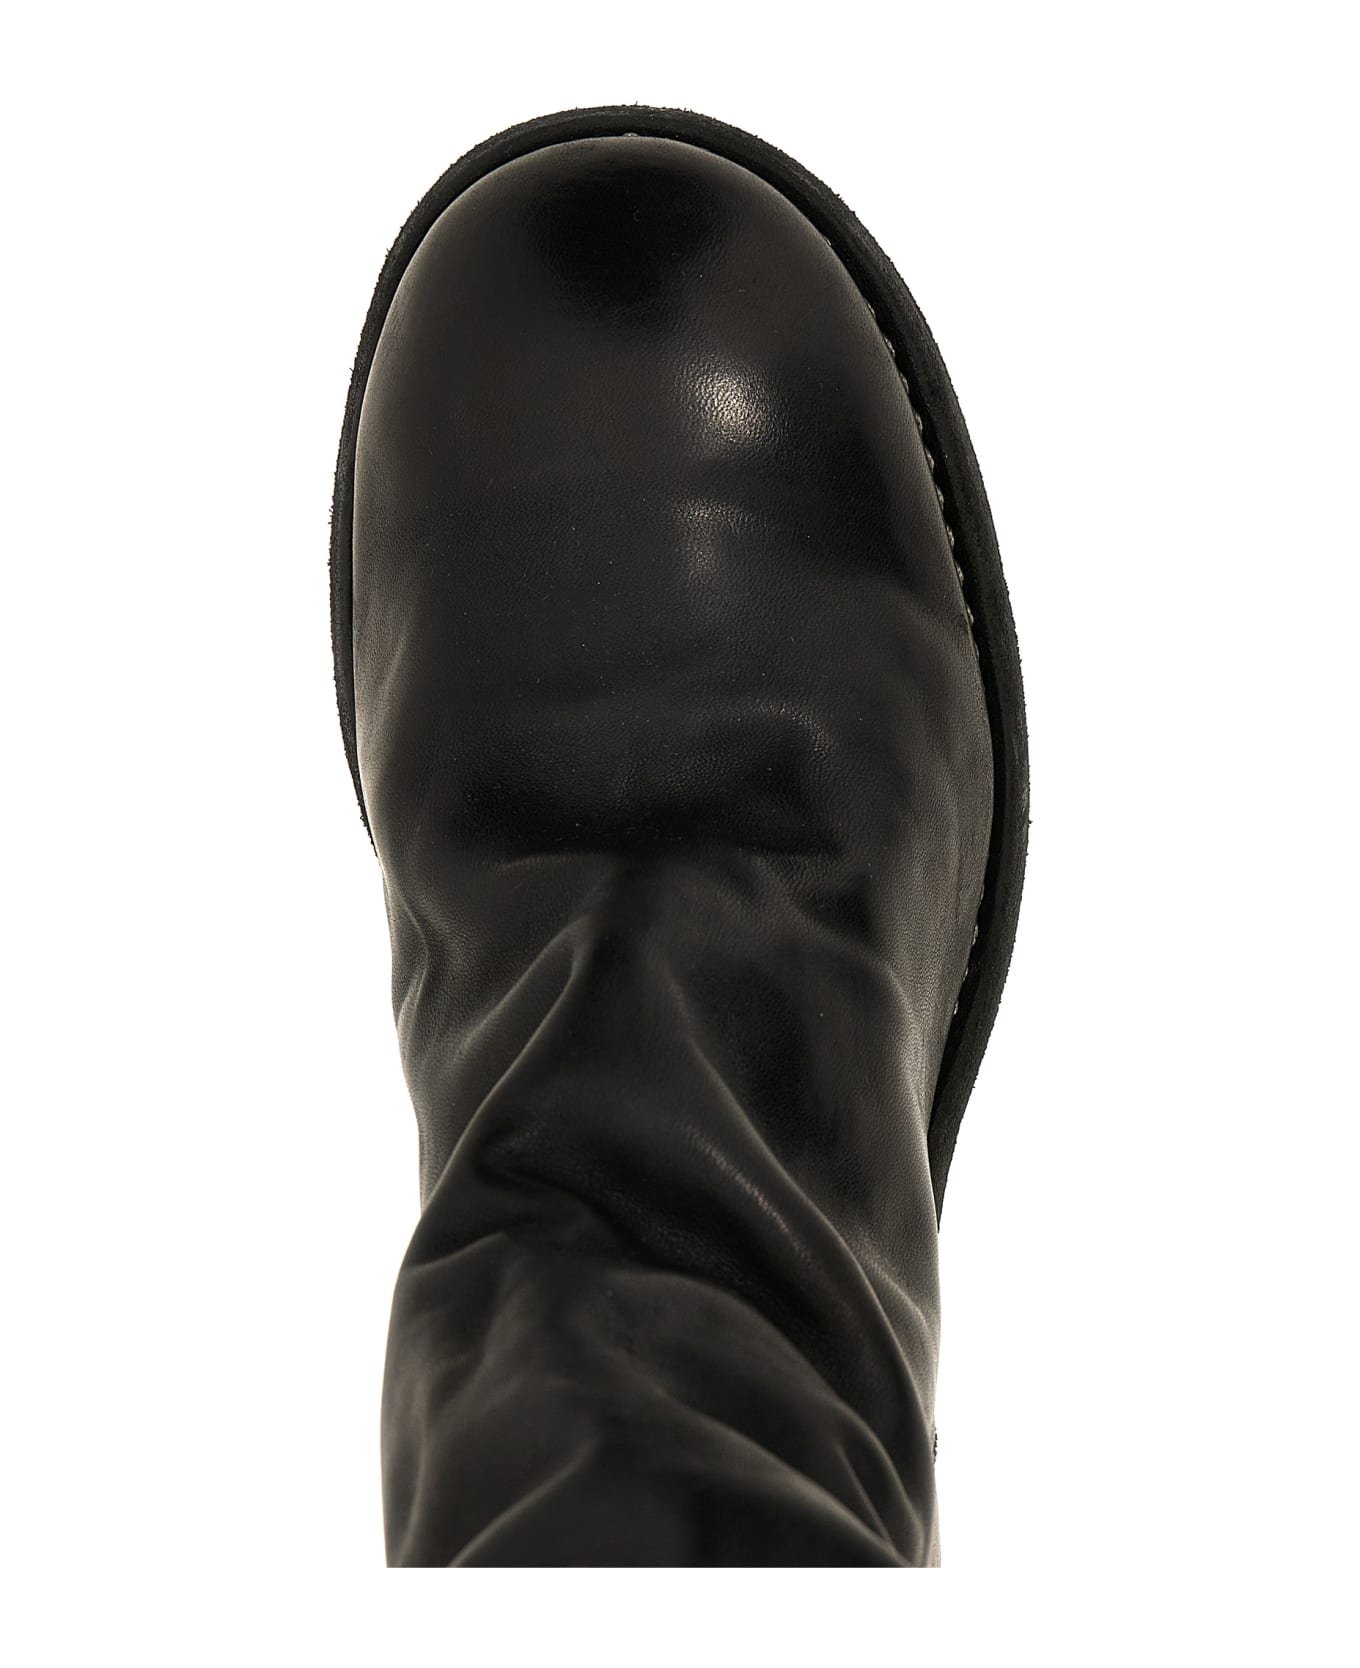 Guidi '789zix' Ankle Boots - Black   ブーツ